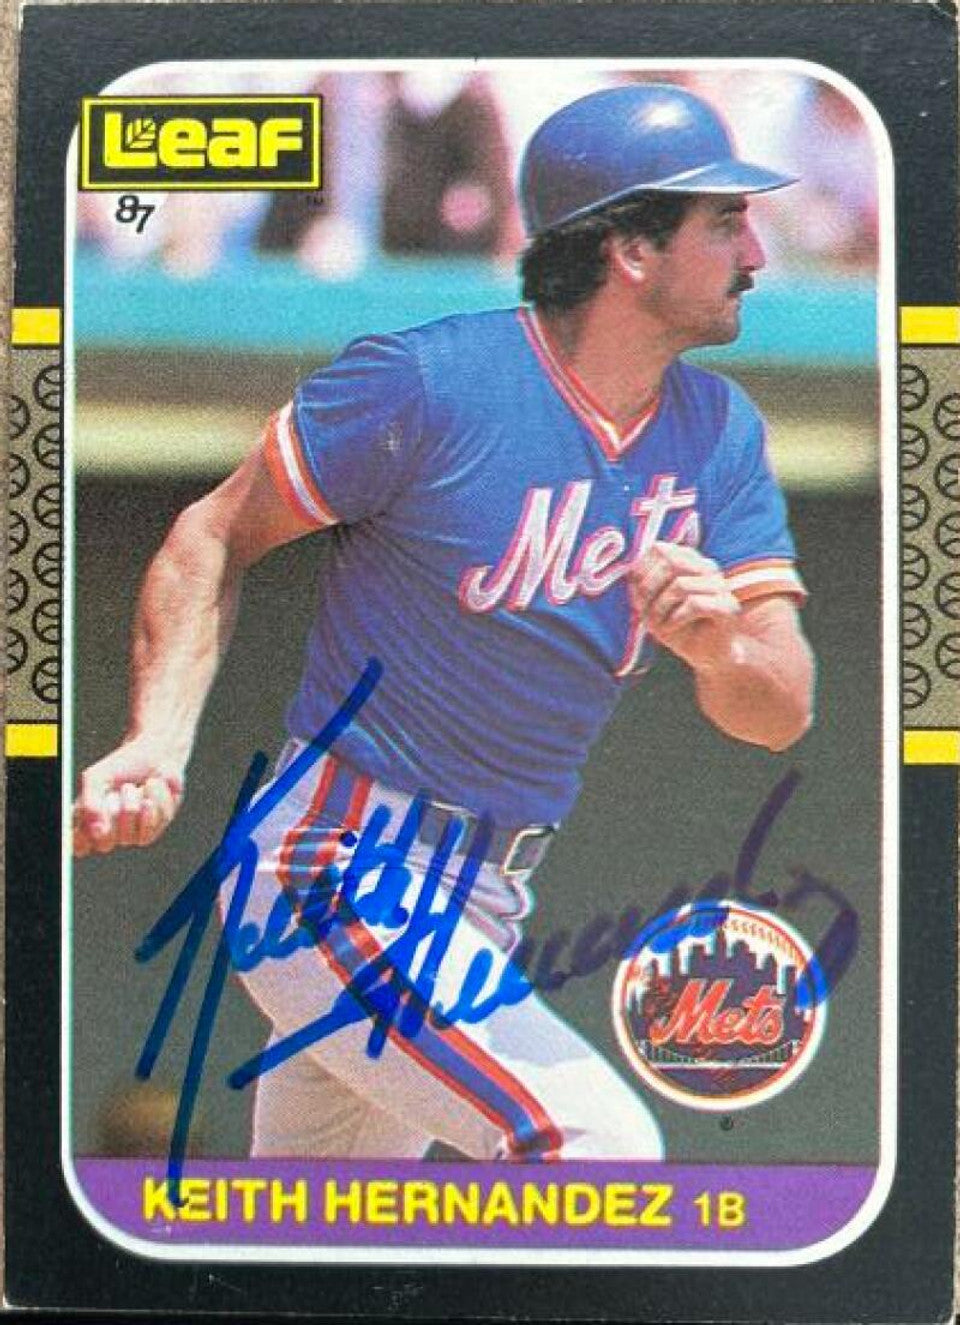 Keith Hernandez Signed 1987 Leaf Baseball Card - New York Mets